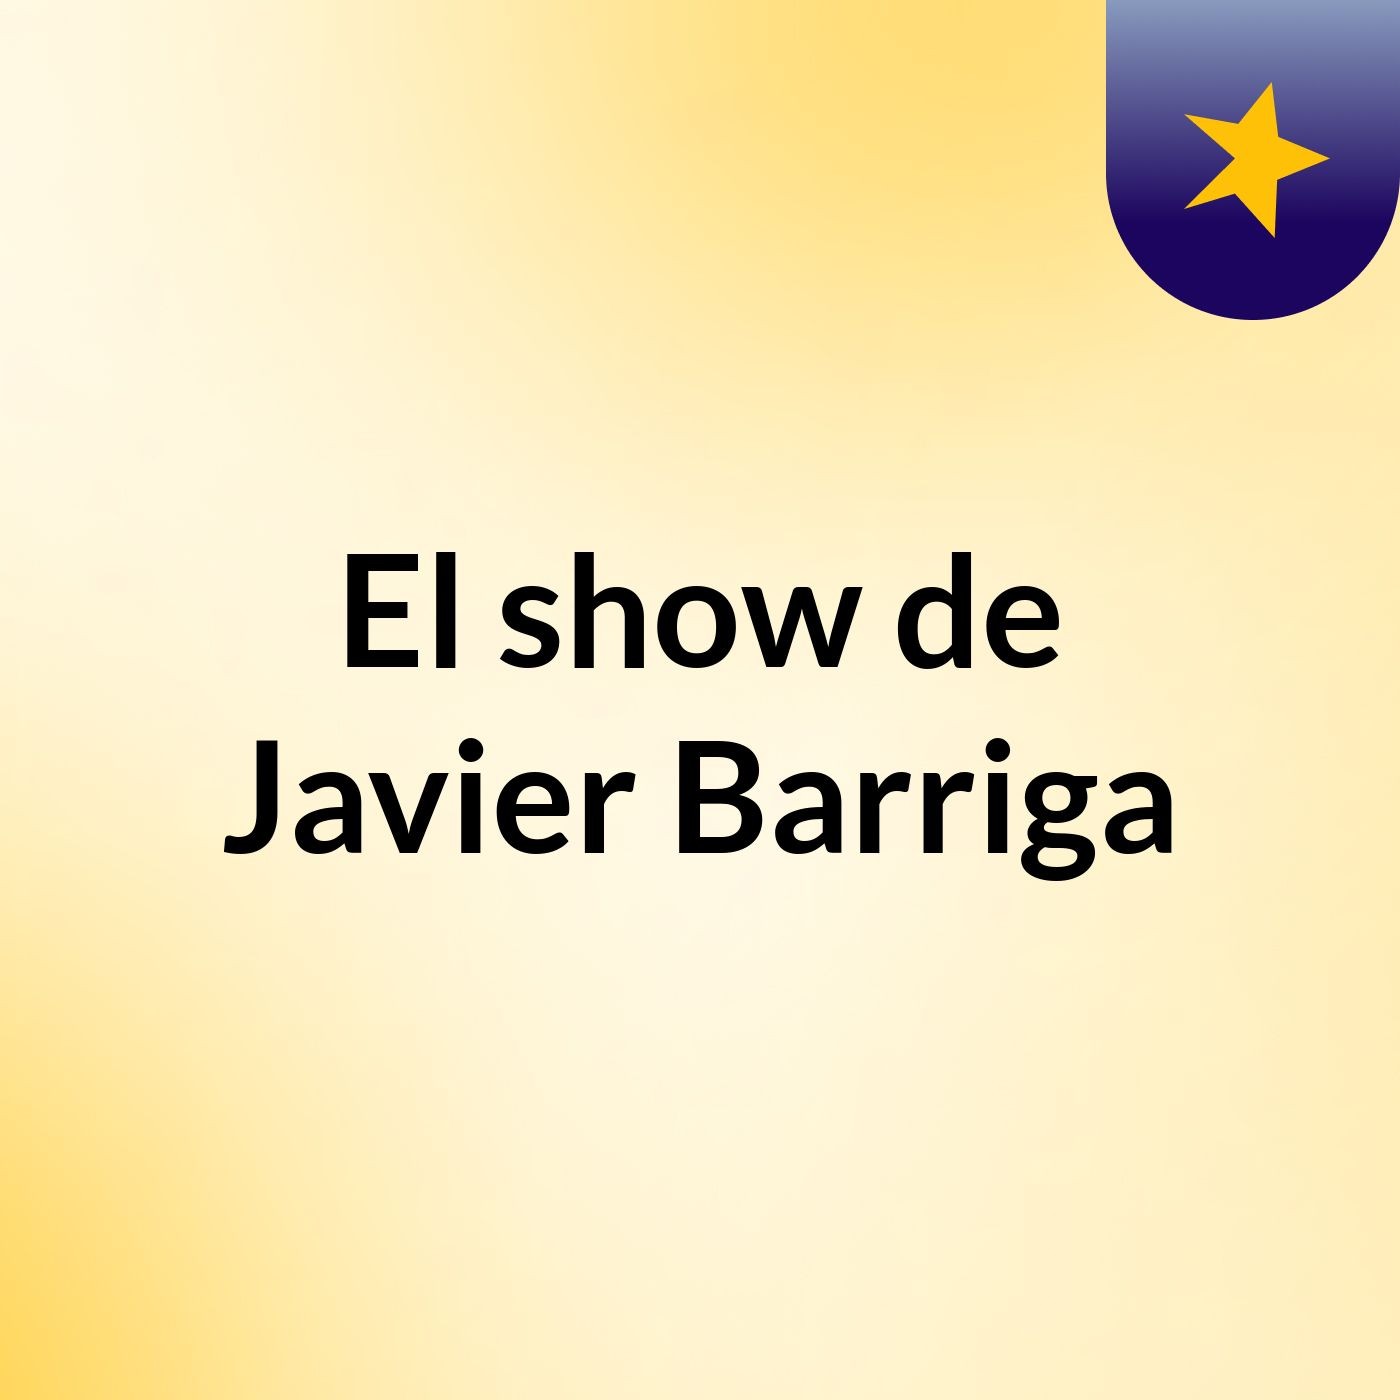 El show de Javier Barriga